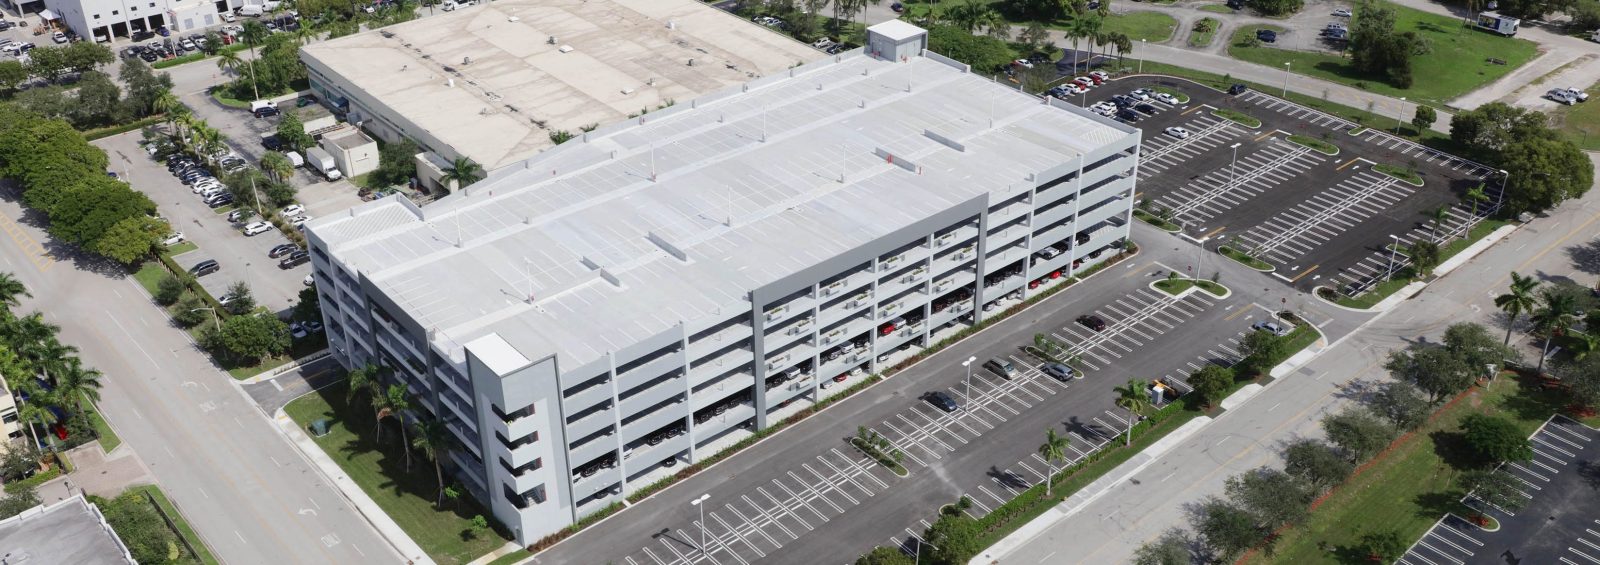 Miami Lakes Auto Mall Parking Garage Final Scaled Aspect Ratio 2550 900